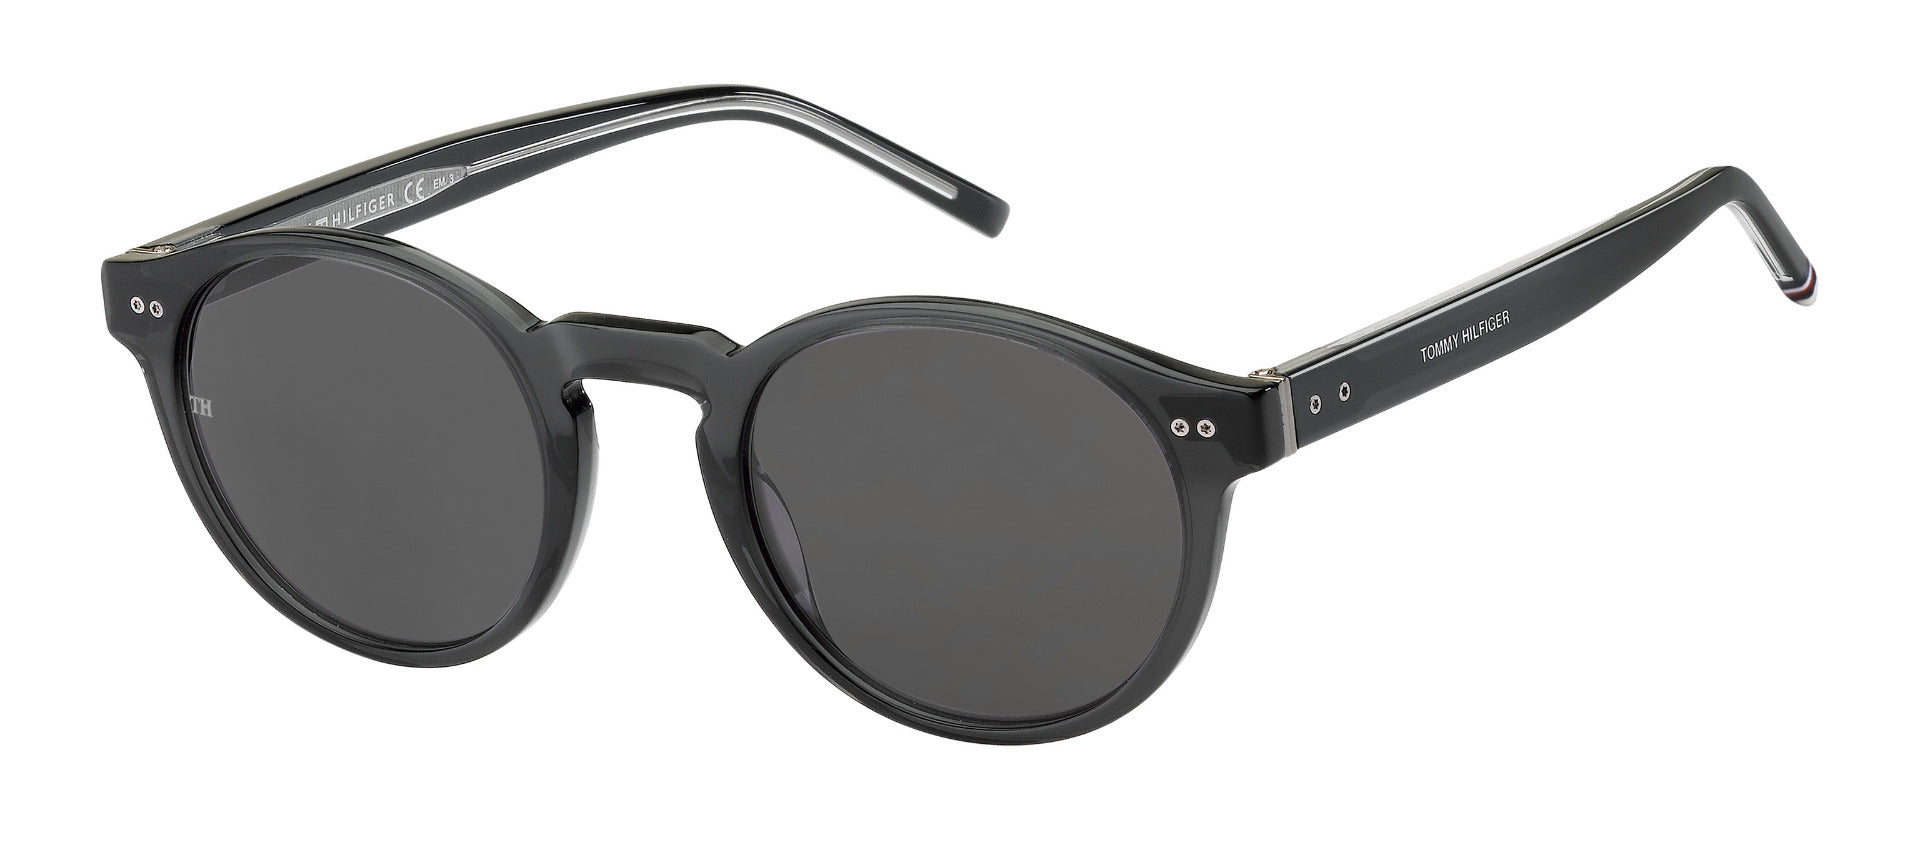 Tommy Hilfiger Round Sunglasses | Fashion Eyewear US